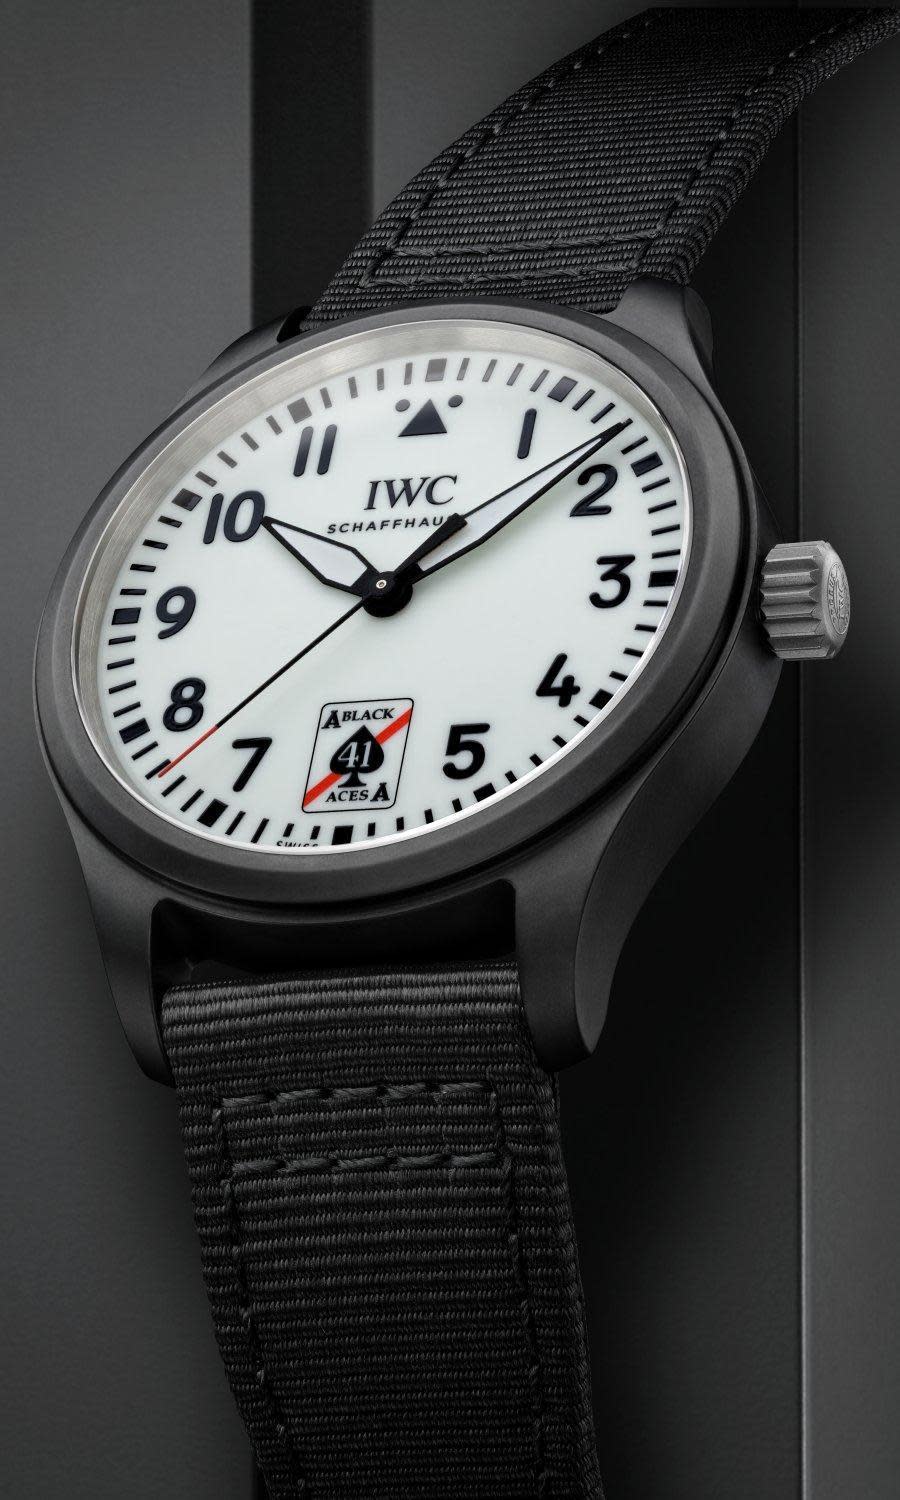 IWC發表全新Pilot’s Watch Automatic 41 Black Aces特別版，配備品牌首見的「全夜光白色錶盤」，搭配黑色陶瓷錶殼，外型非常特別。6點鐘位置印上的Black Aces「黑桃A」中隊隊徽標誌，也非常搶眼。定價約NT$215,000。